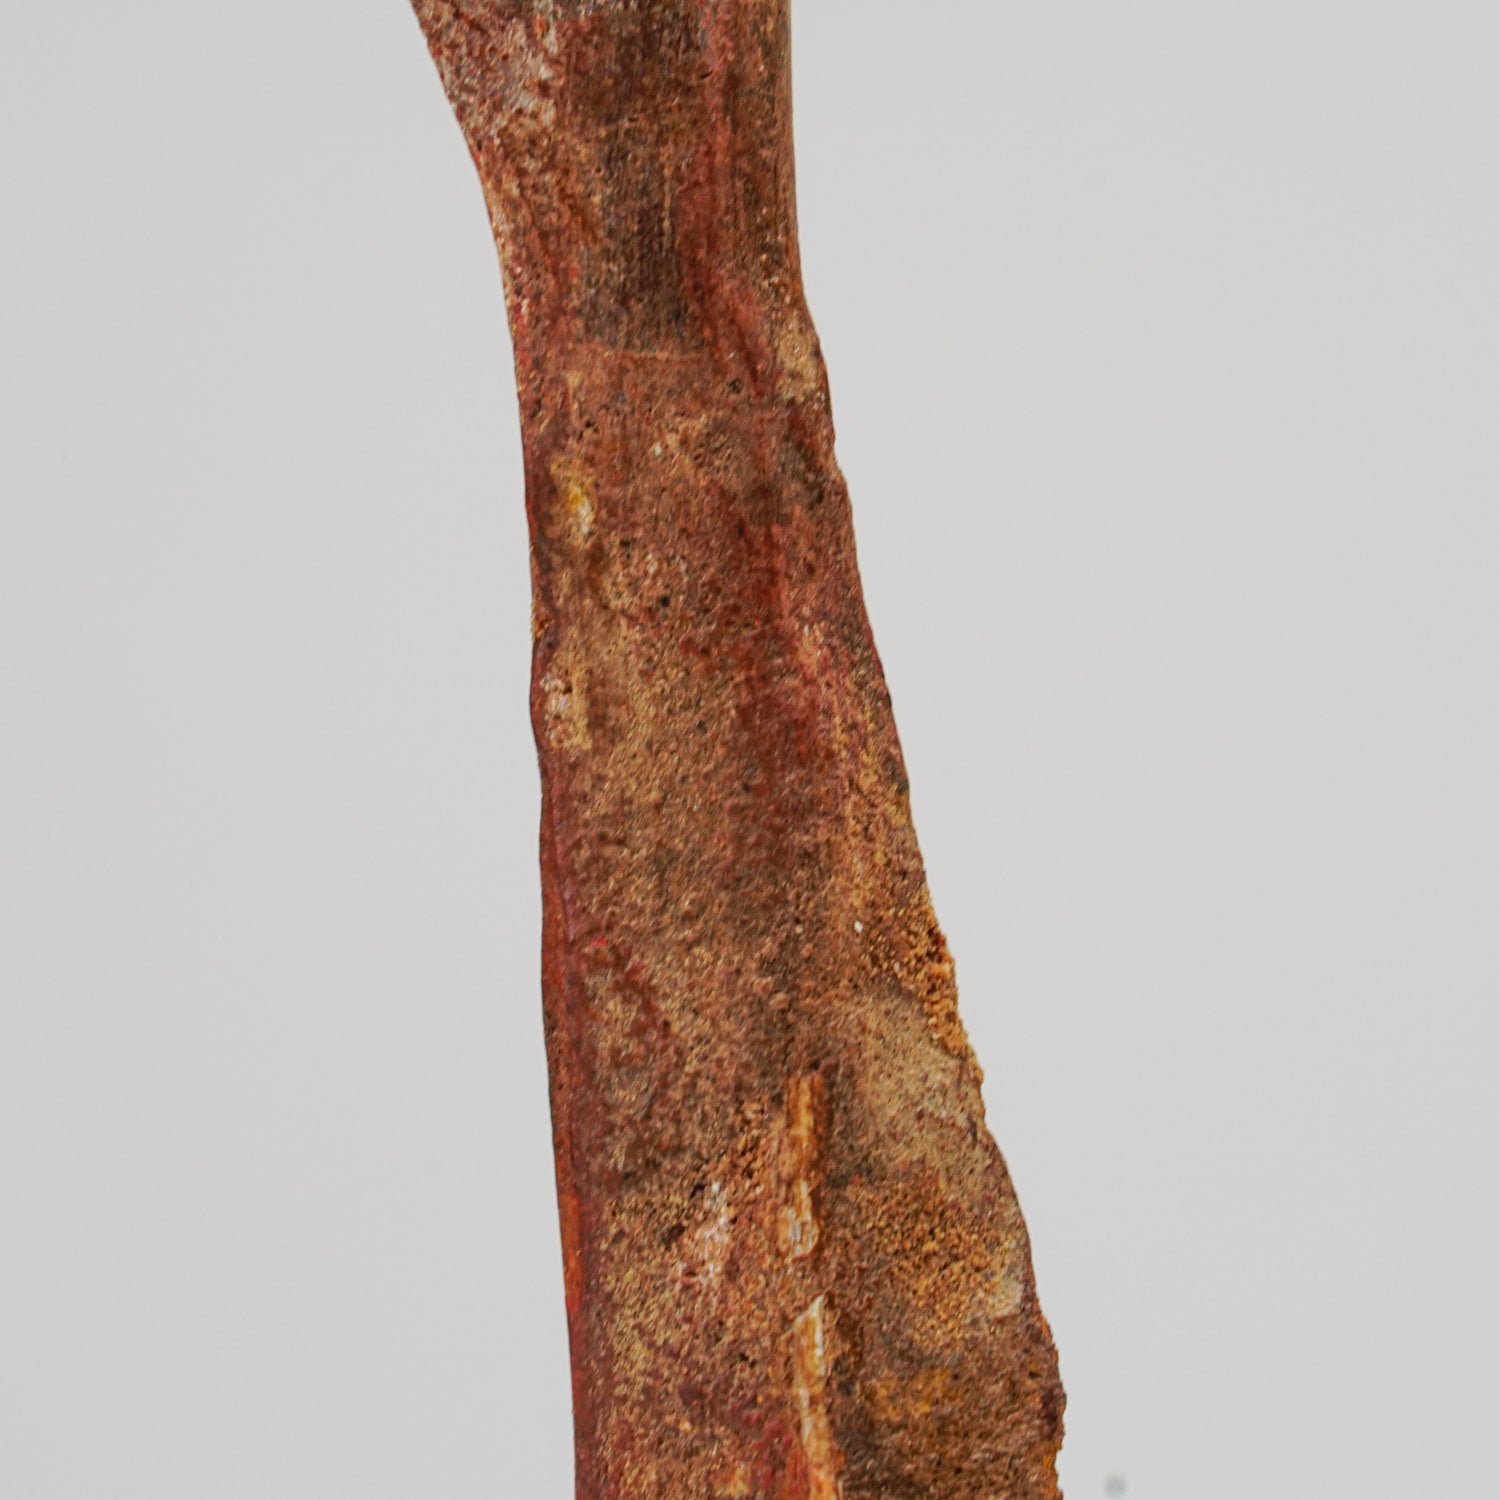 Spinosaurus Maroccanus Bone From Baharija Formation, South of Taouz, Kem-kem Basin, Morocco